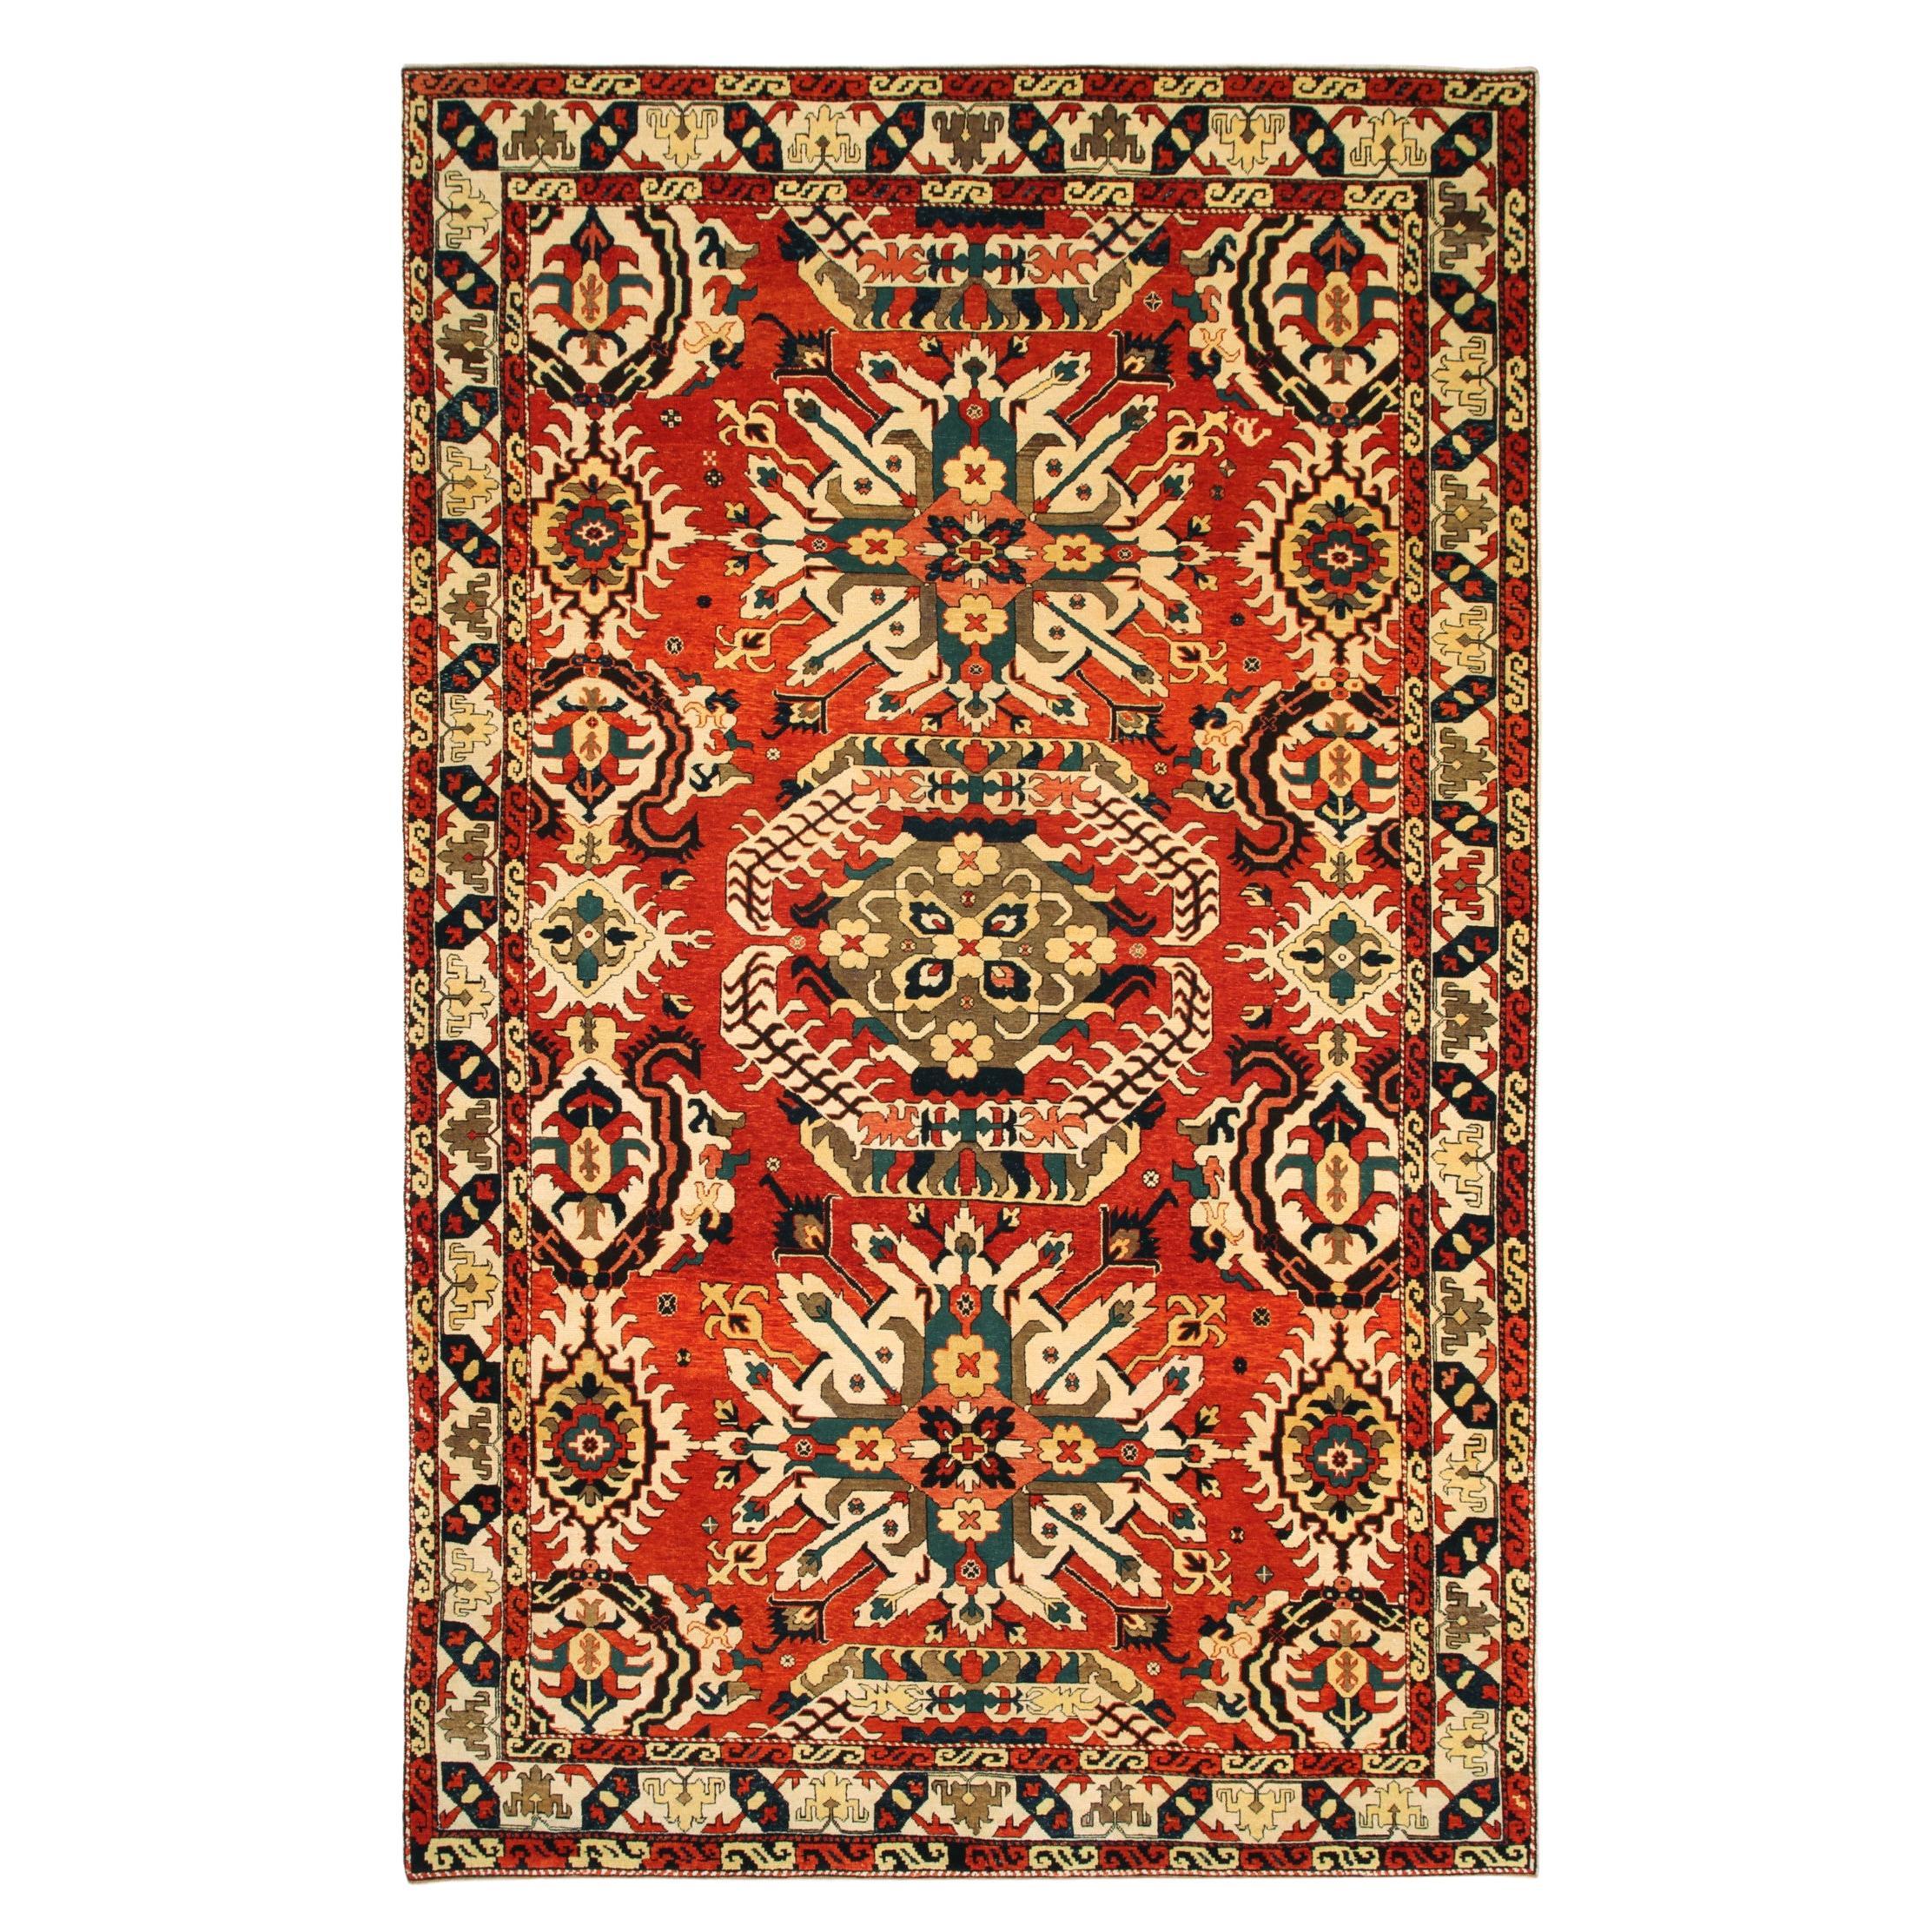 Ararat Rugs Chelaberd Karabakh Rug 19th C. Caucasian Revival Carpet Natural Dyed For Sale